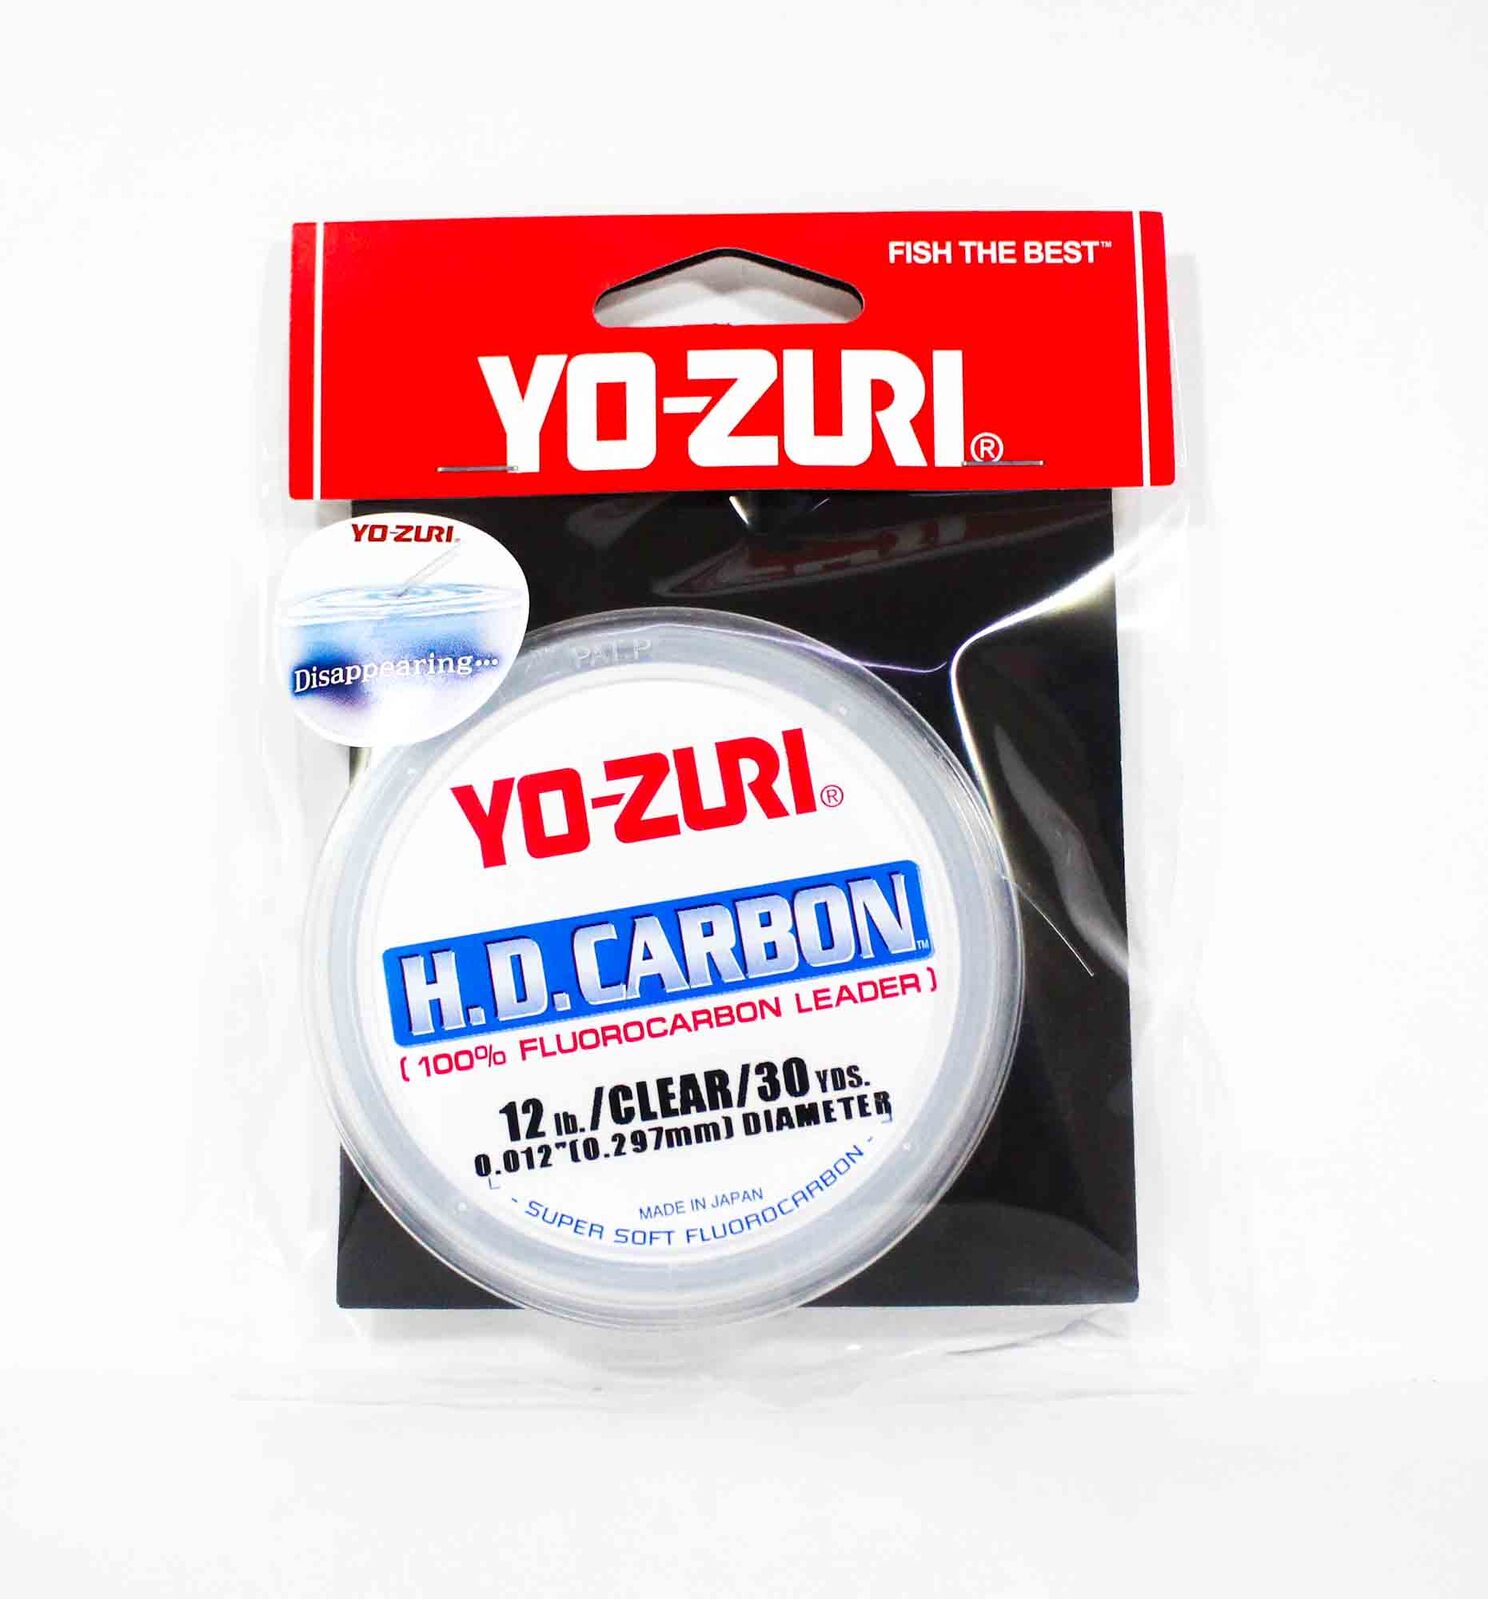 Yo Zuri H.D Carbon 30yds Clear Fluorocarbon Fishing Leader #12lb